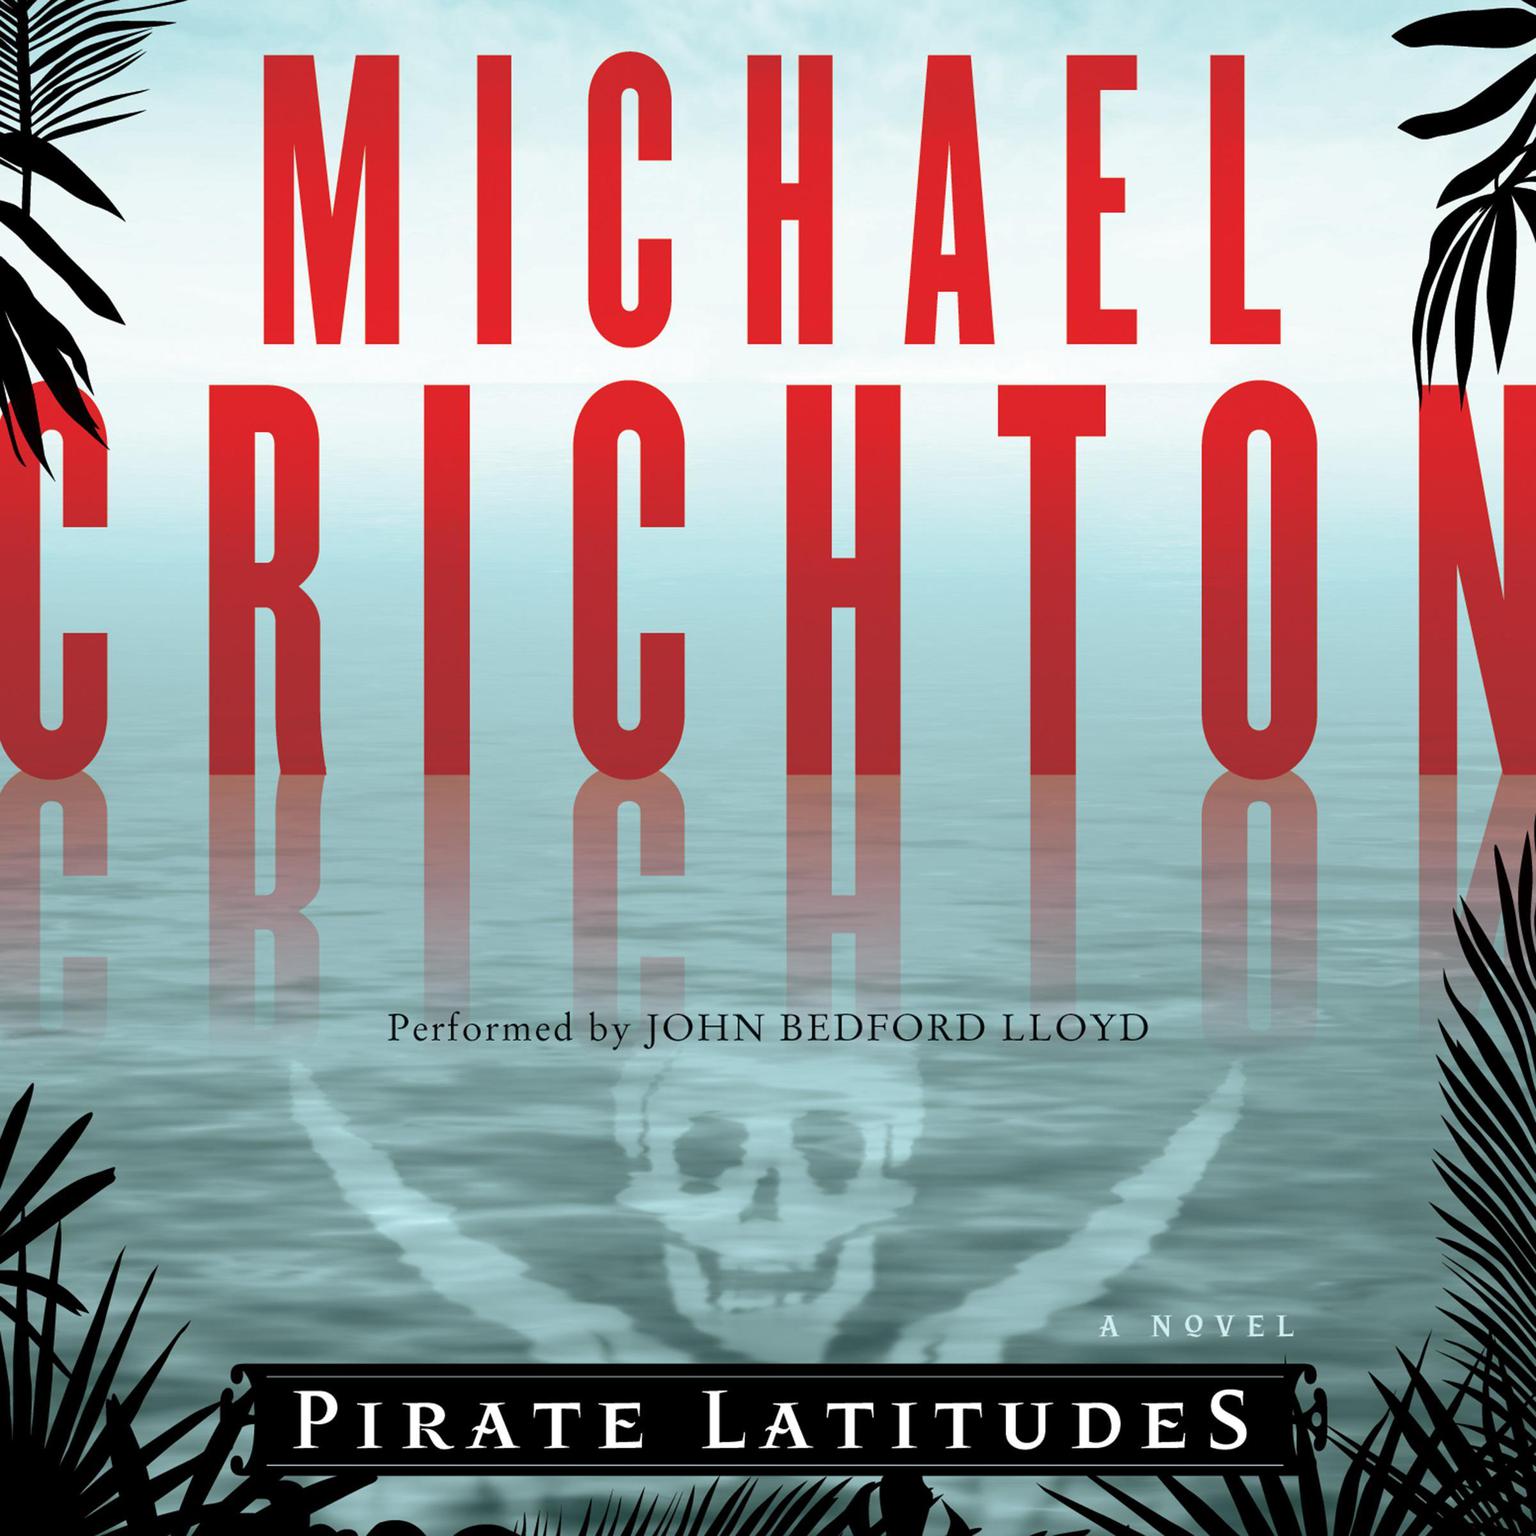 Pirate Latitudes: A Novel Audiobook, by Michael Crichton